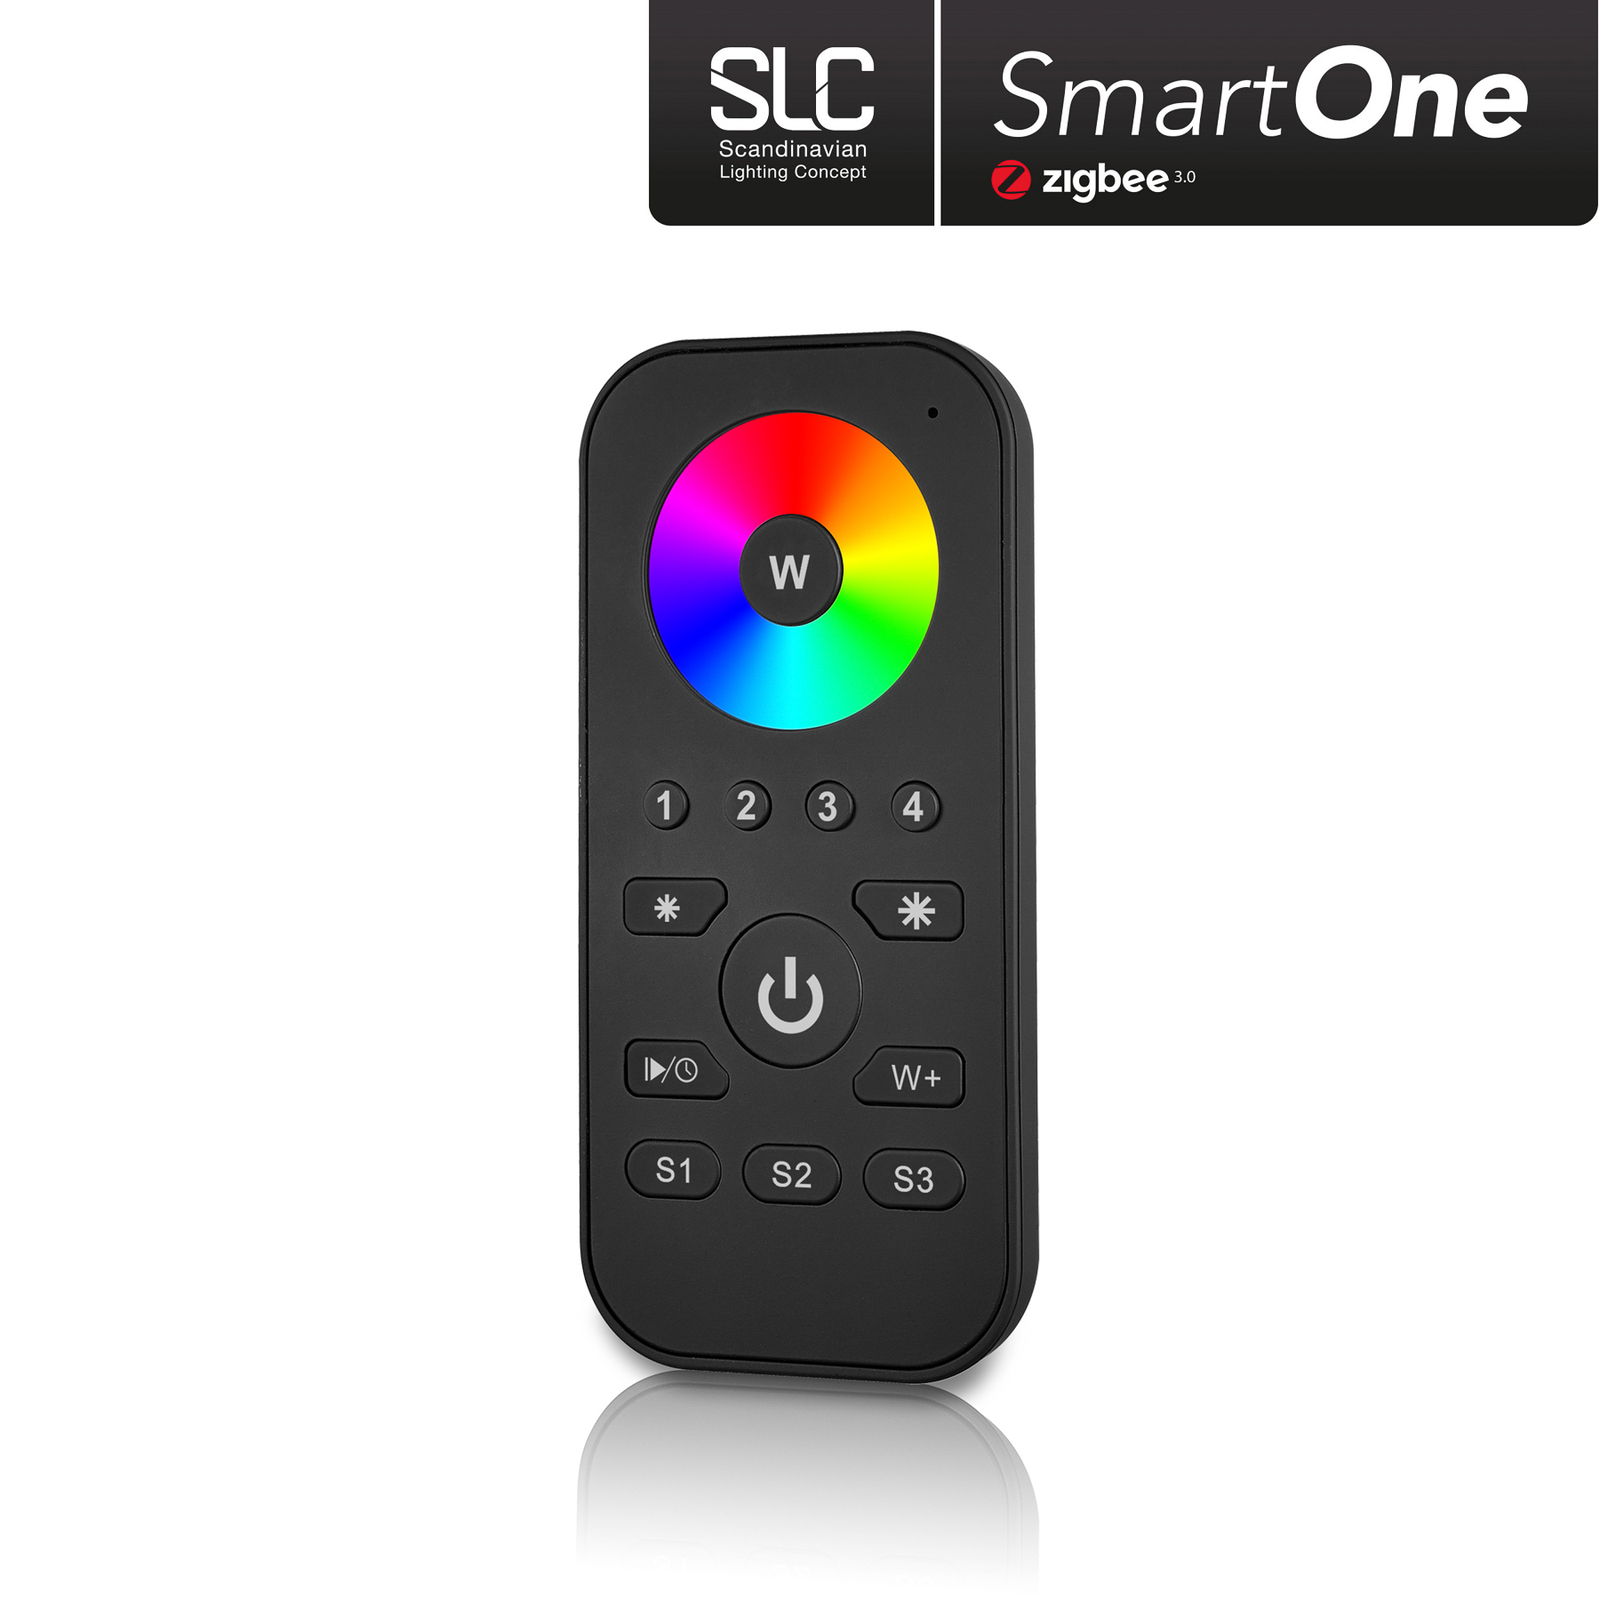 SLC SmartOne ZigBee telecomando 4 canali RGB RGBW